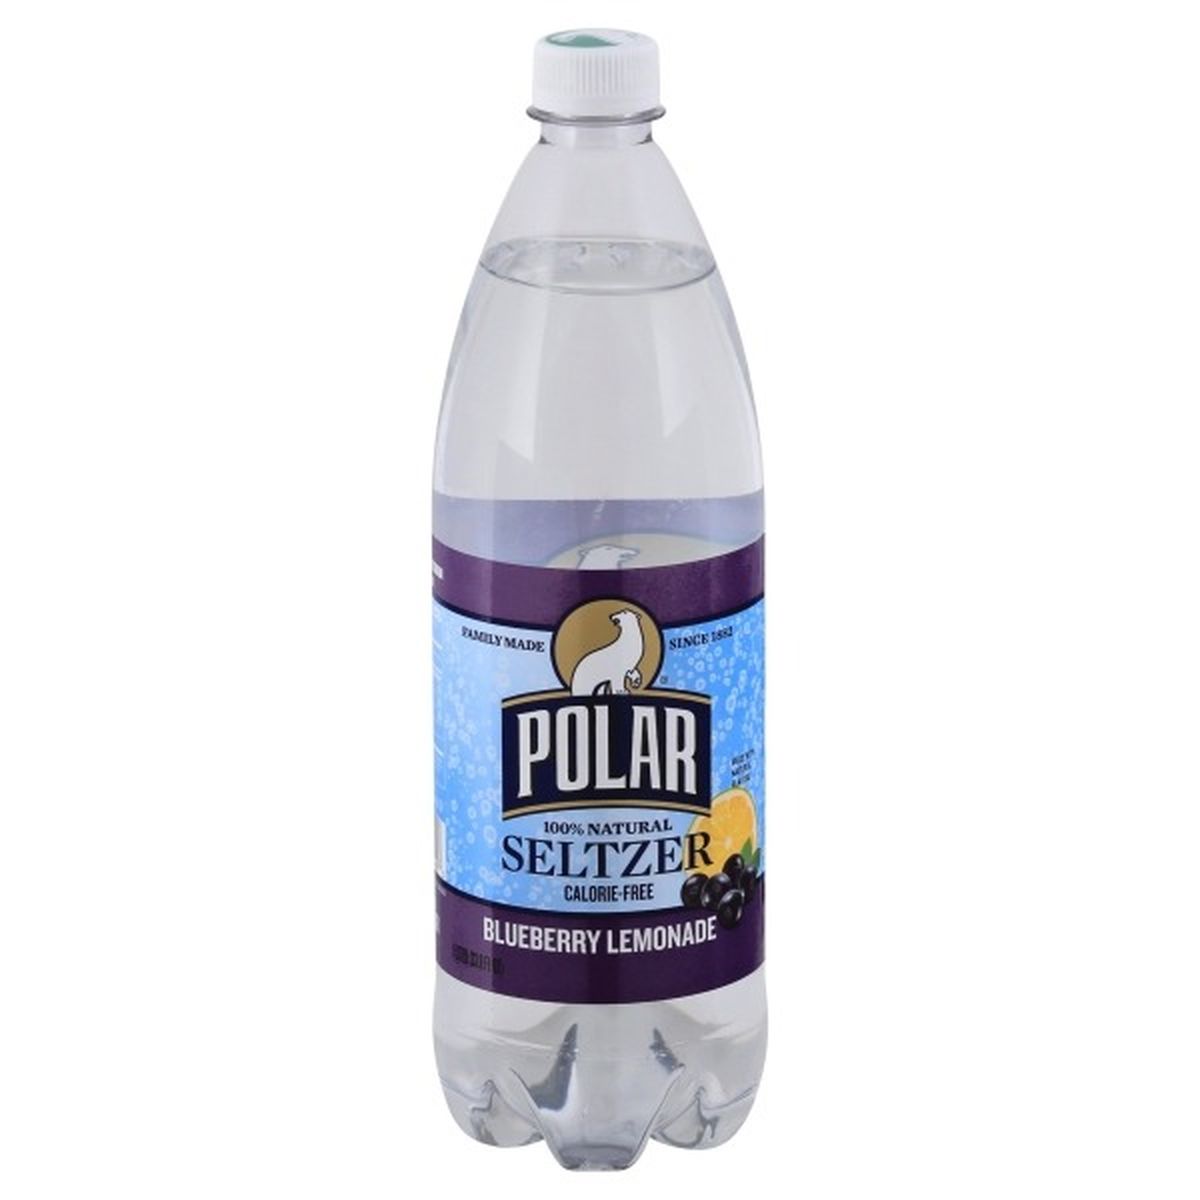 Calories in Polar Seltzer, 100% Natural,  Blueberry Lemonade